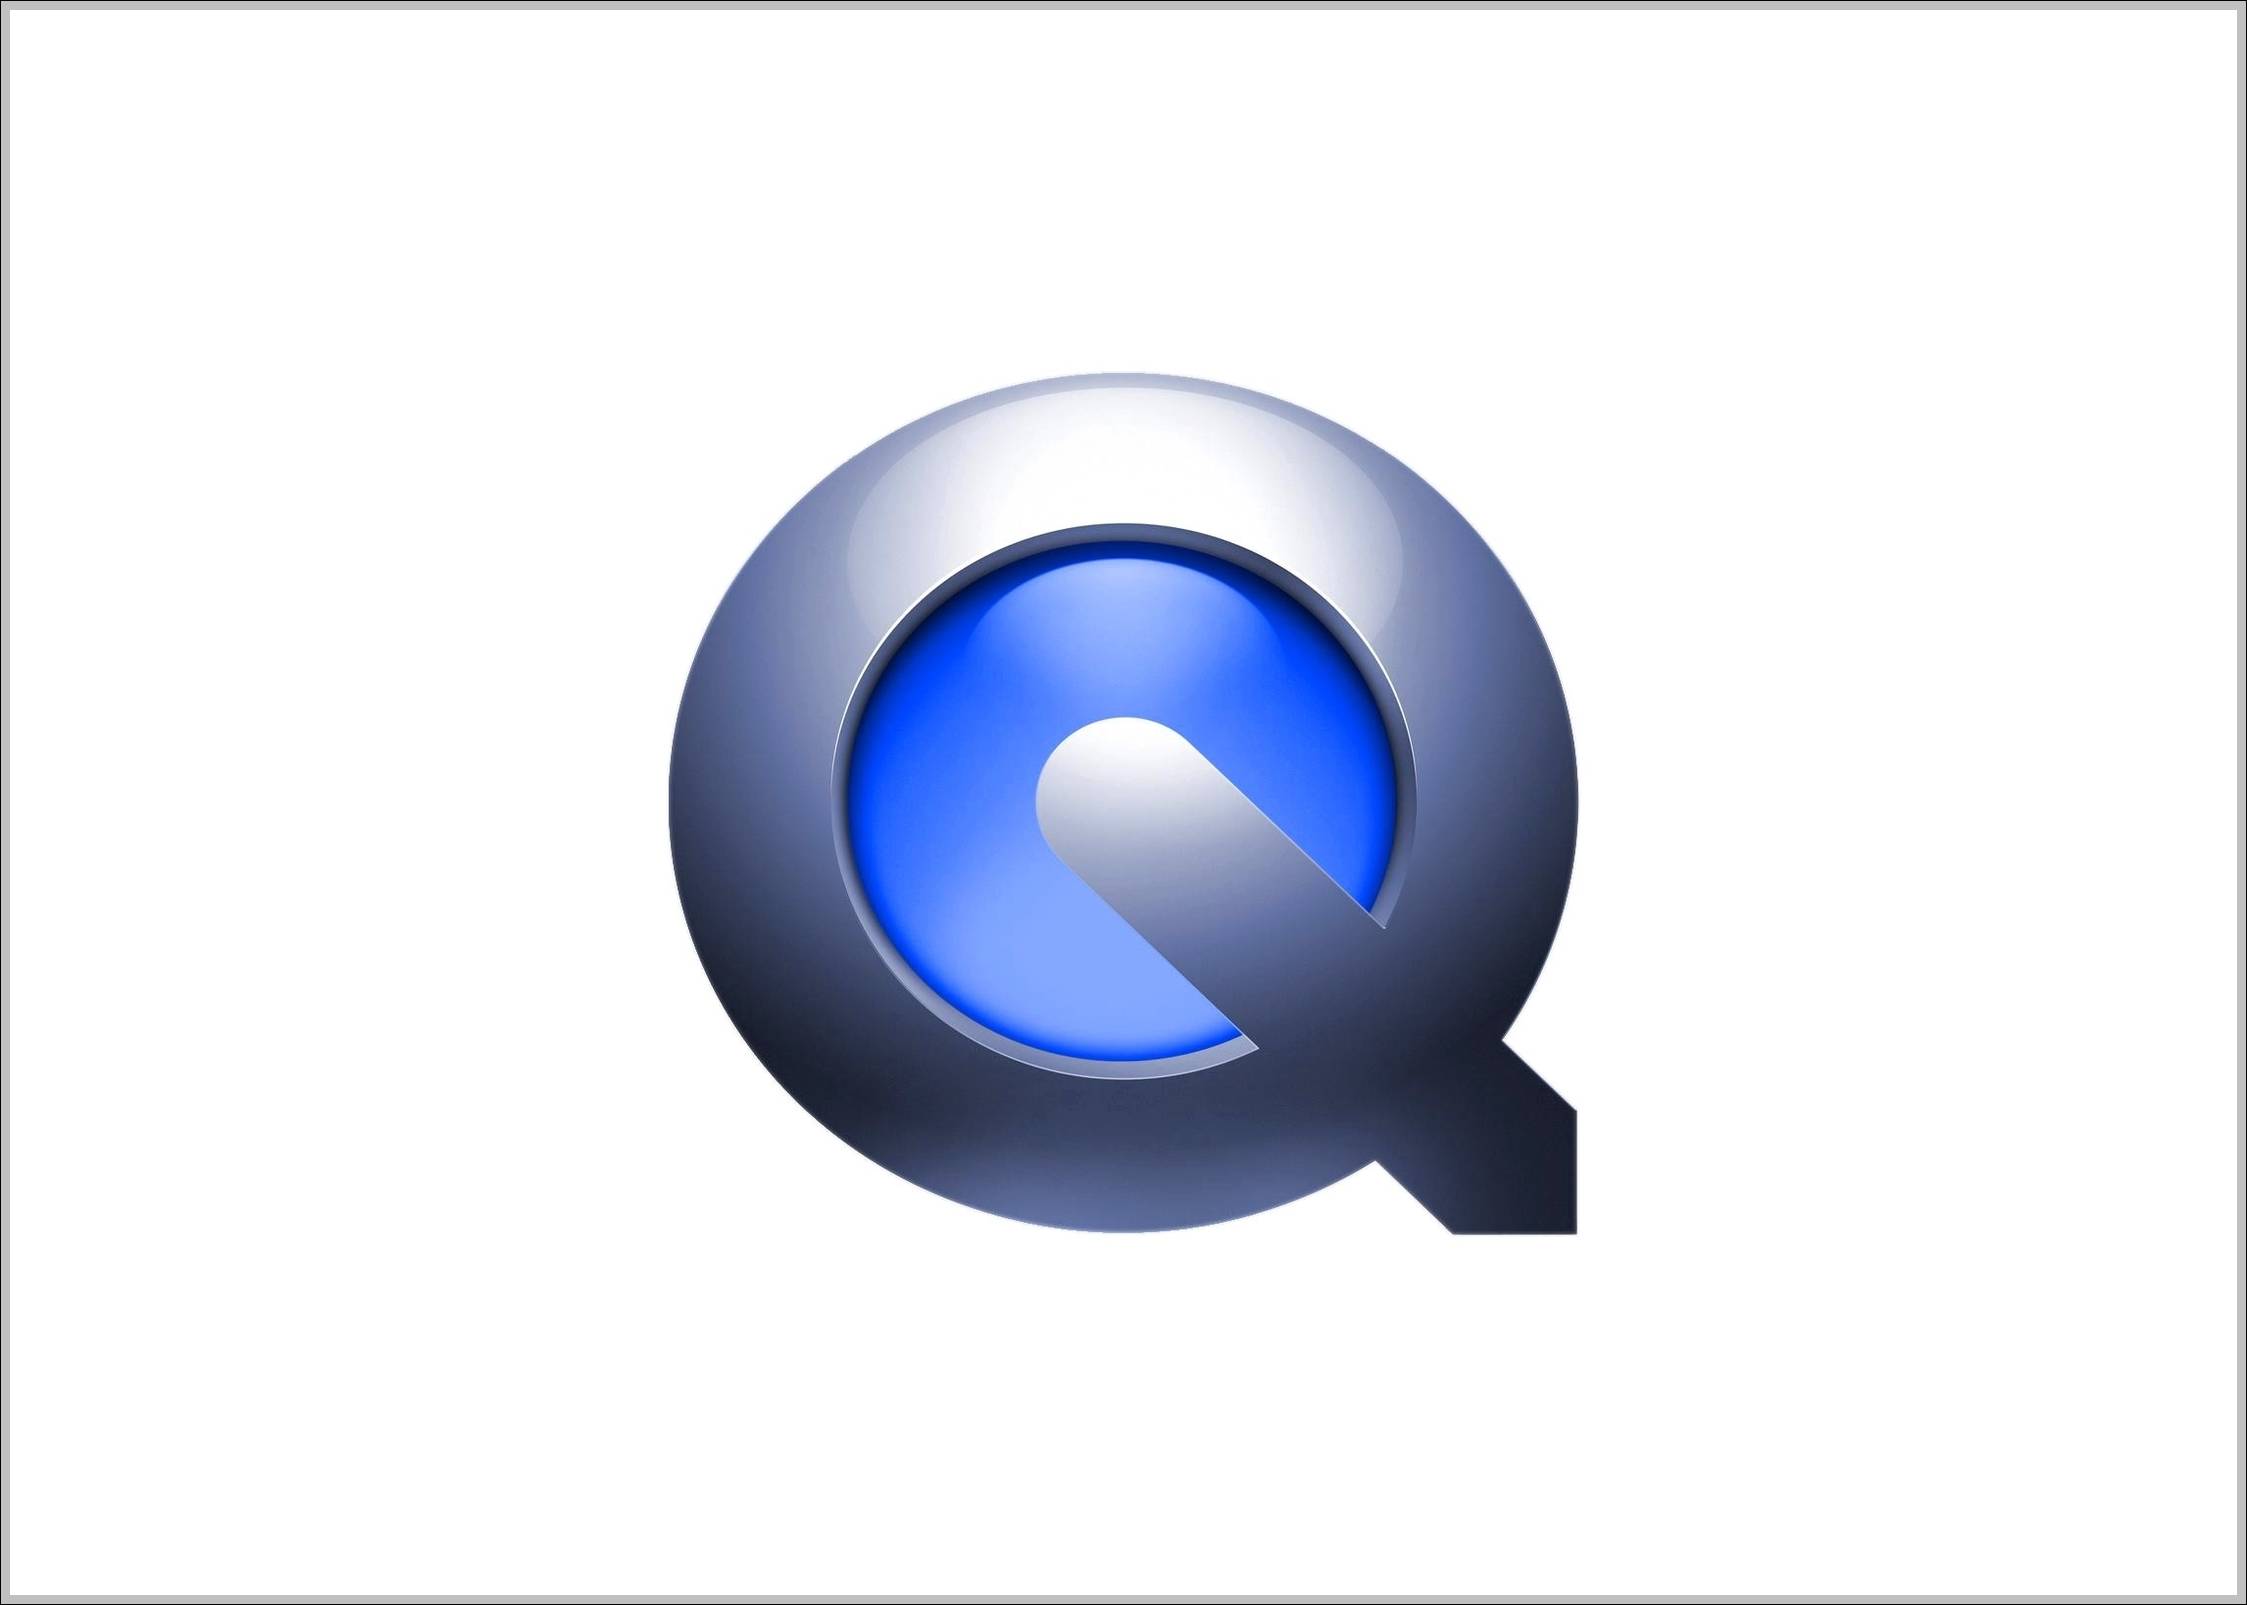 QuickTime logo